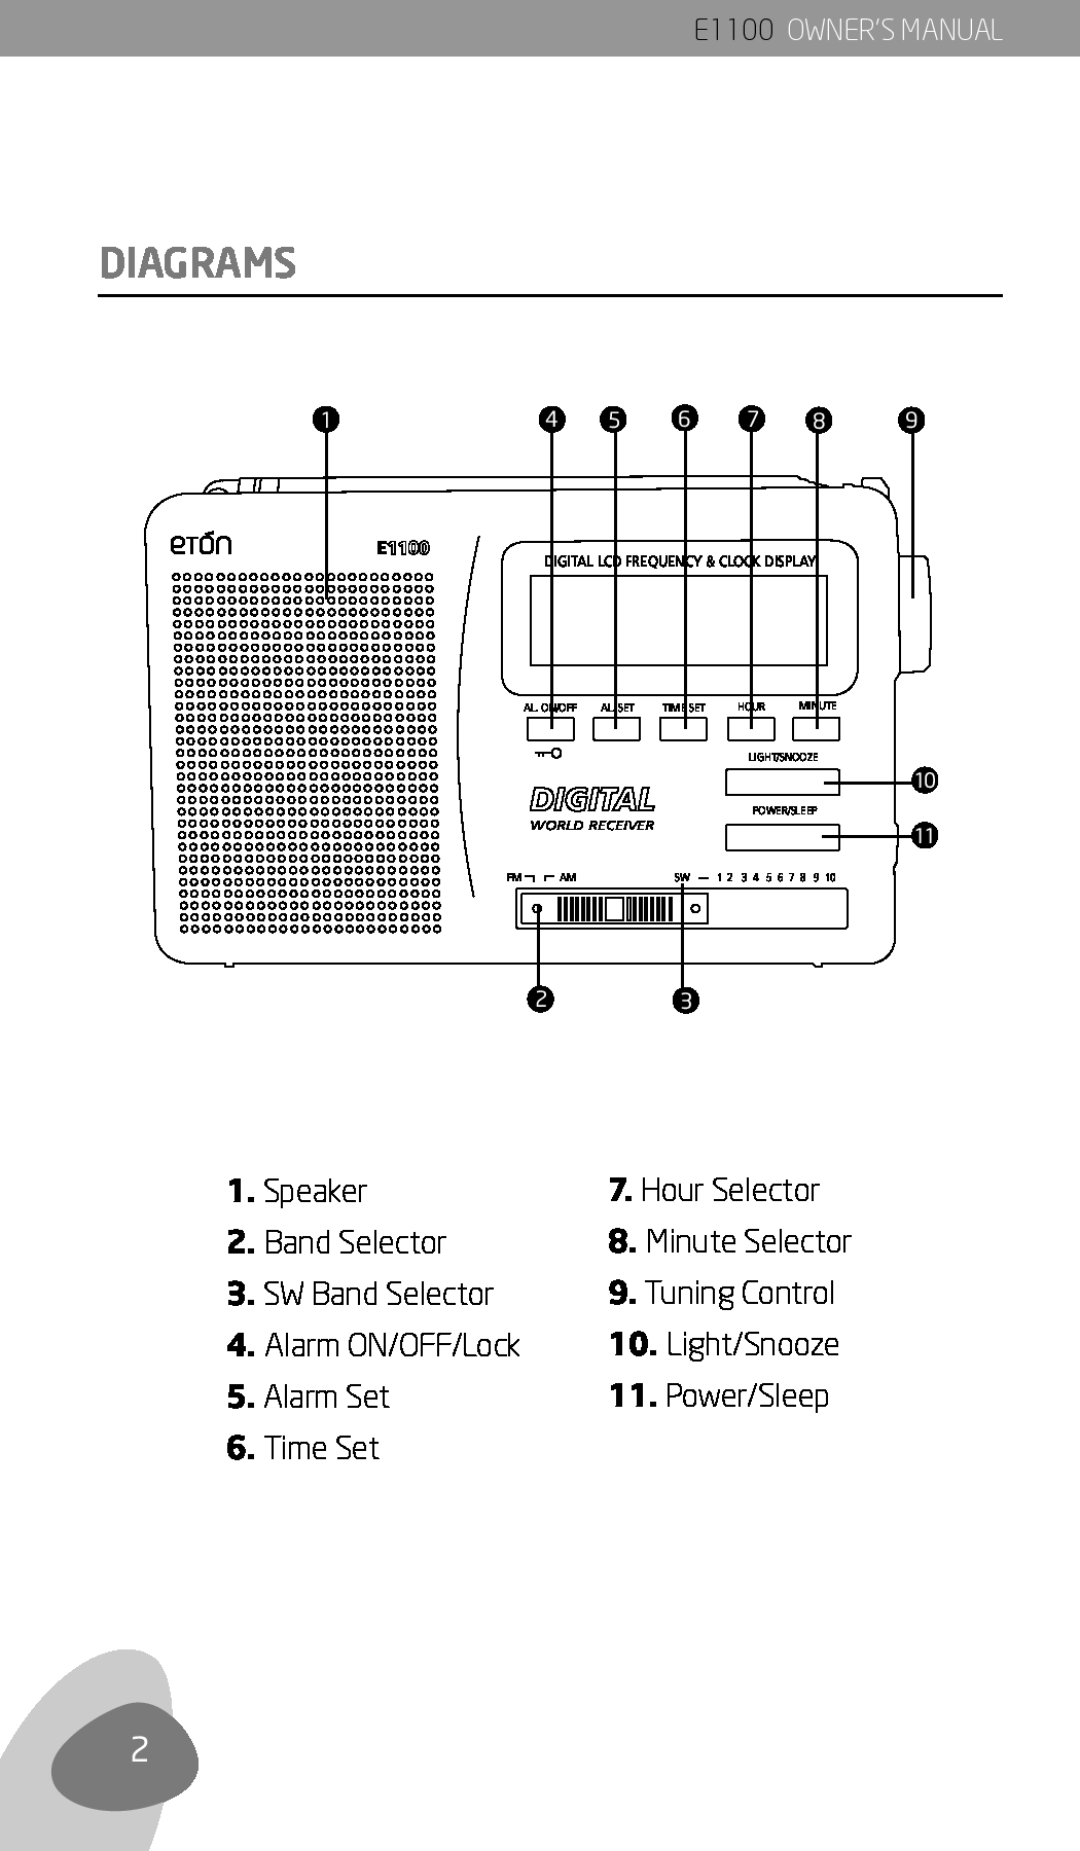 Eton E1100 Diagrams, Speaker, Hour Selector, SW Band Selector, Alarm ON/OFF/Lock, Alarm Set, Minute Selector 